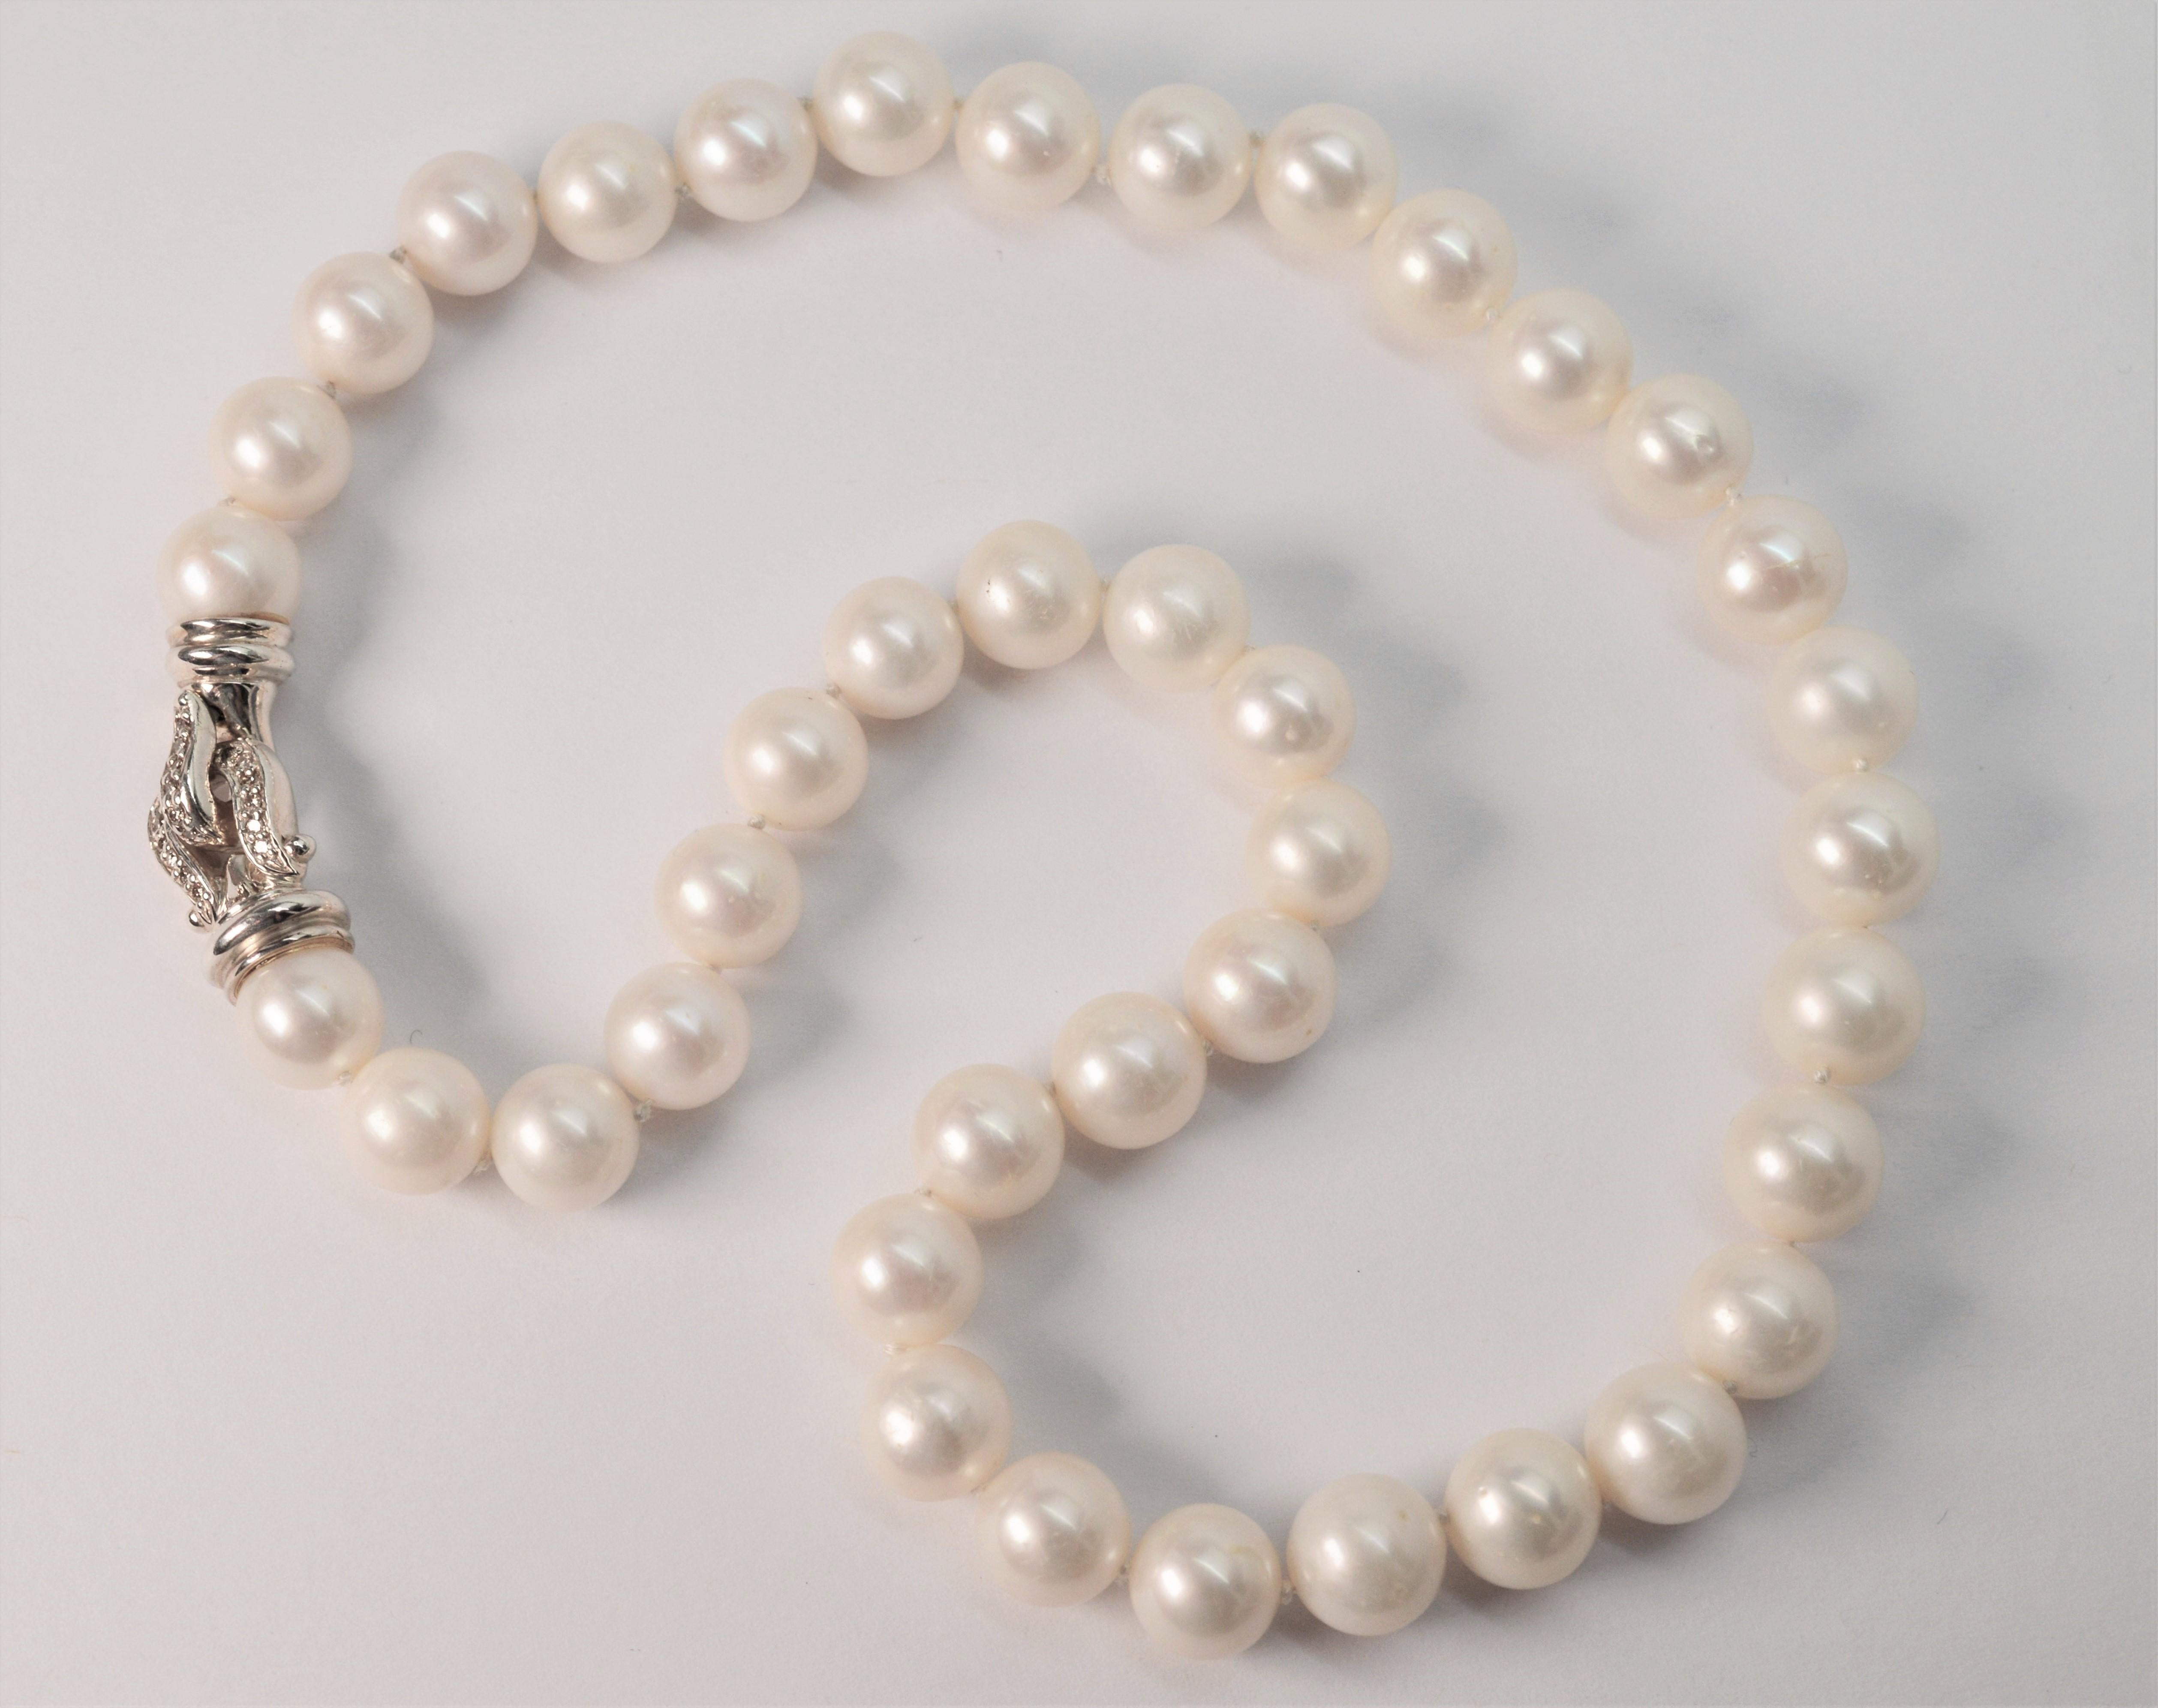 david yurman pearl necklace with diamonds